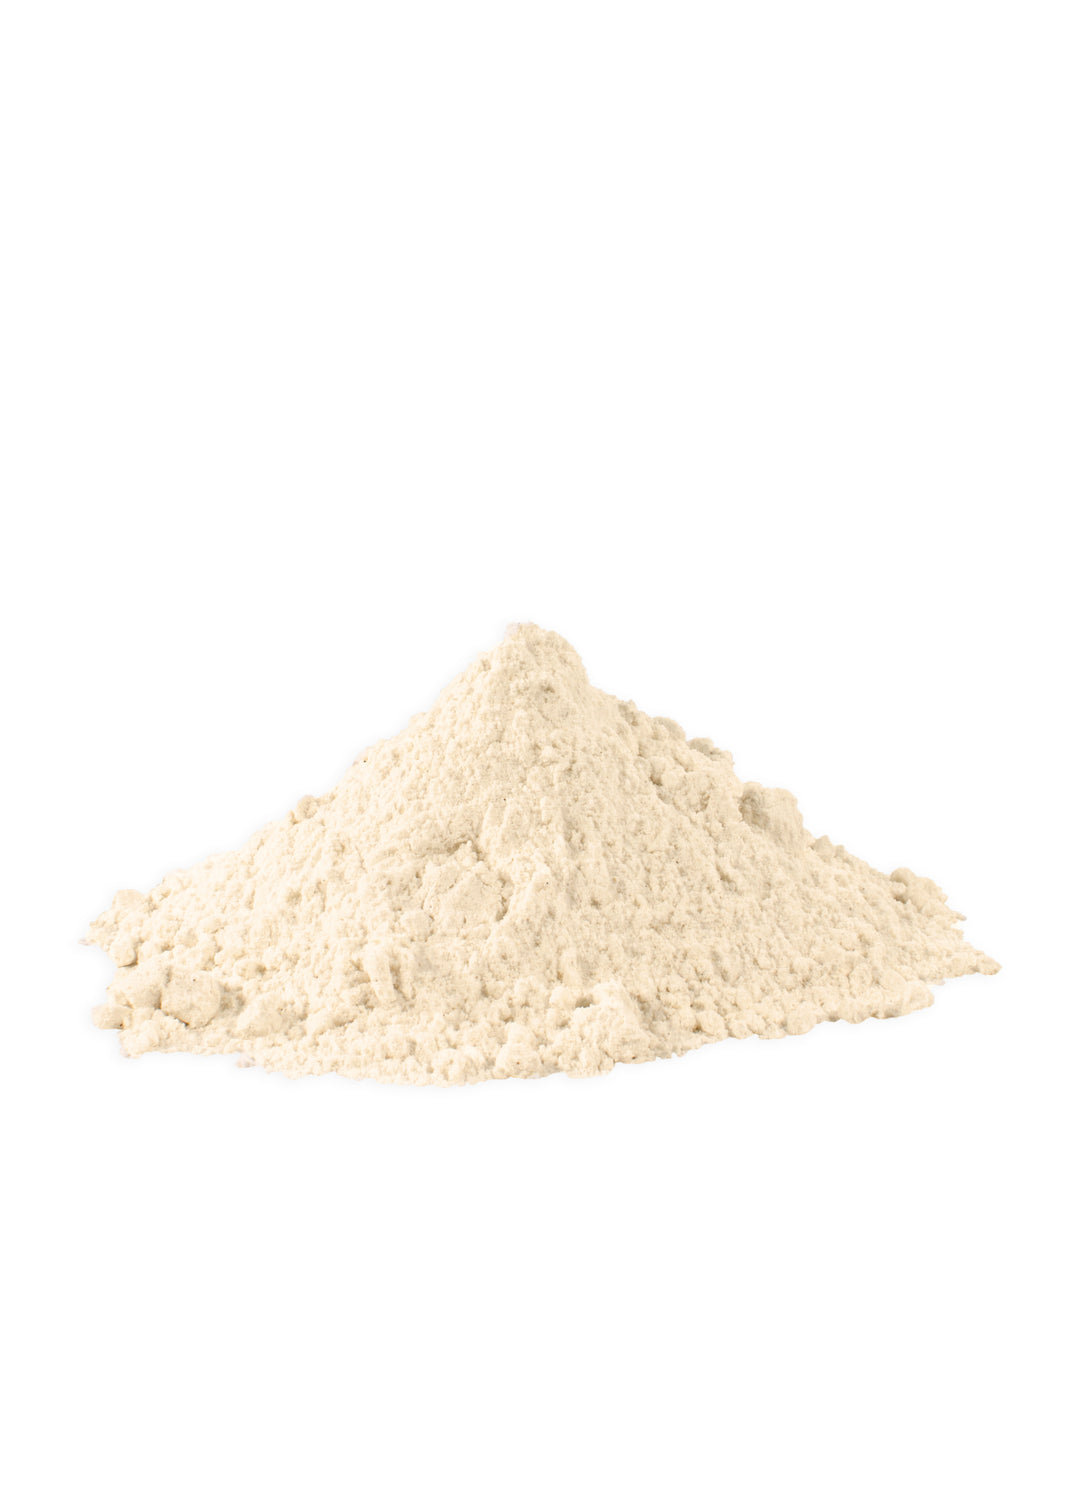 Bob's Red Mill Natural Foods Inc Kosher Artisan Bread Flour-5 lb.-4/Case